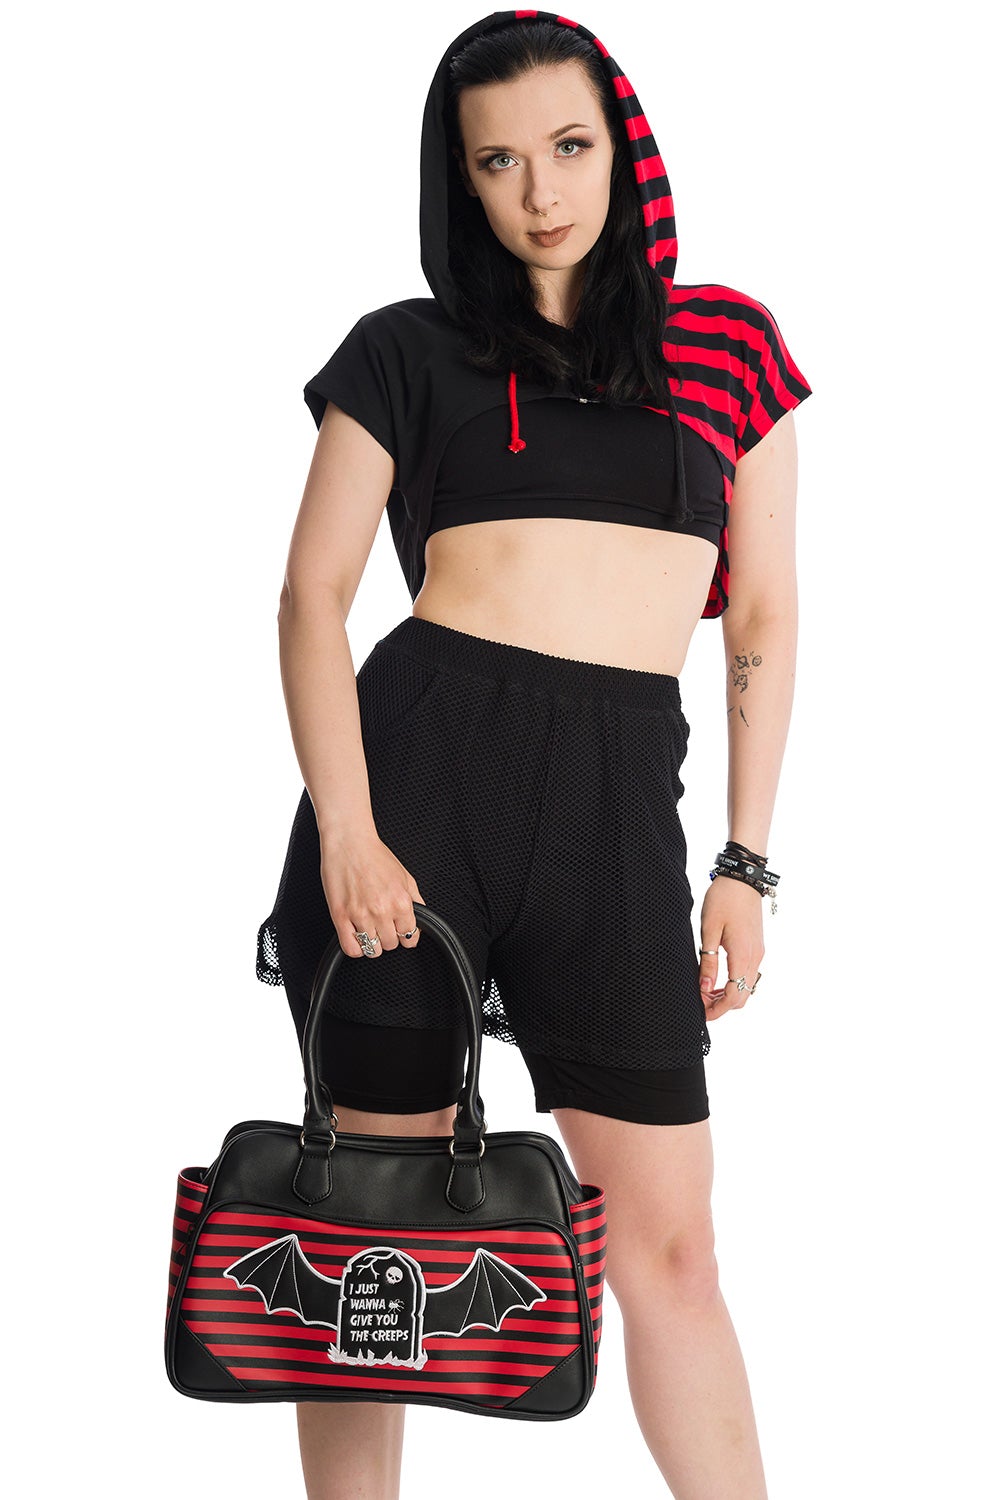 Alternative model in cropped half red strip and half black hoodie holding red striped handbag